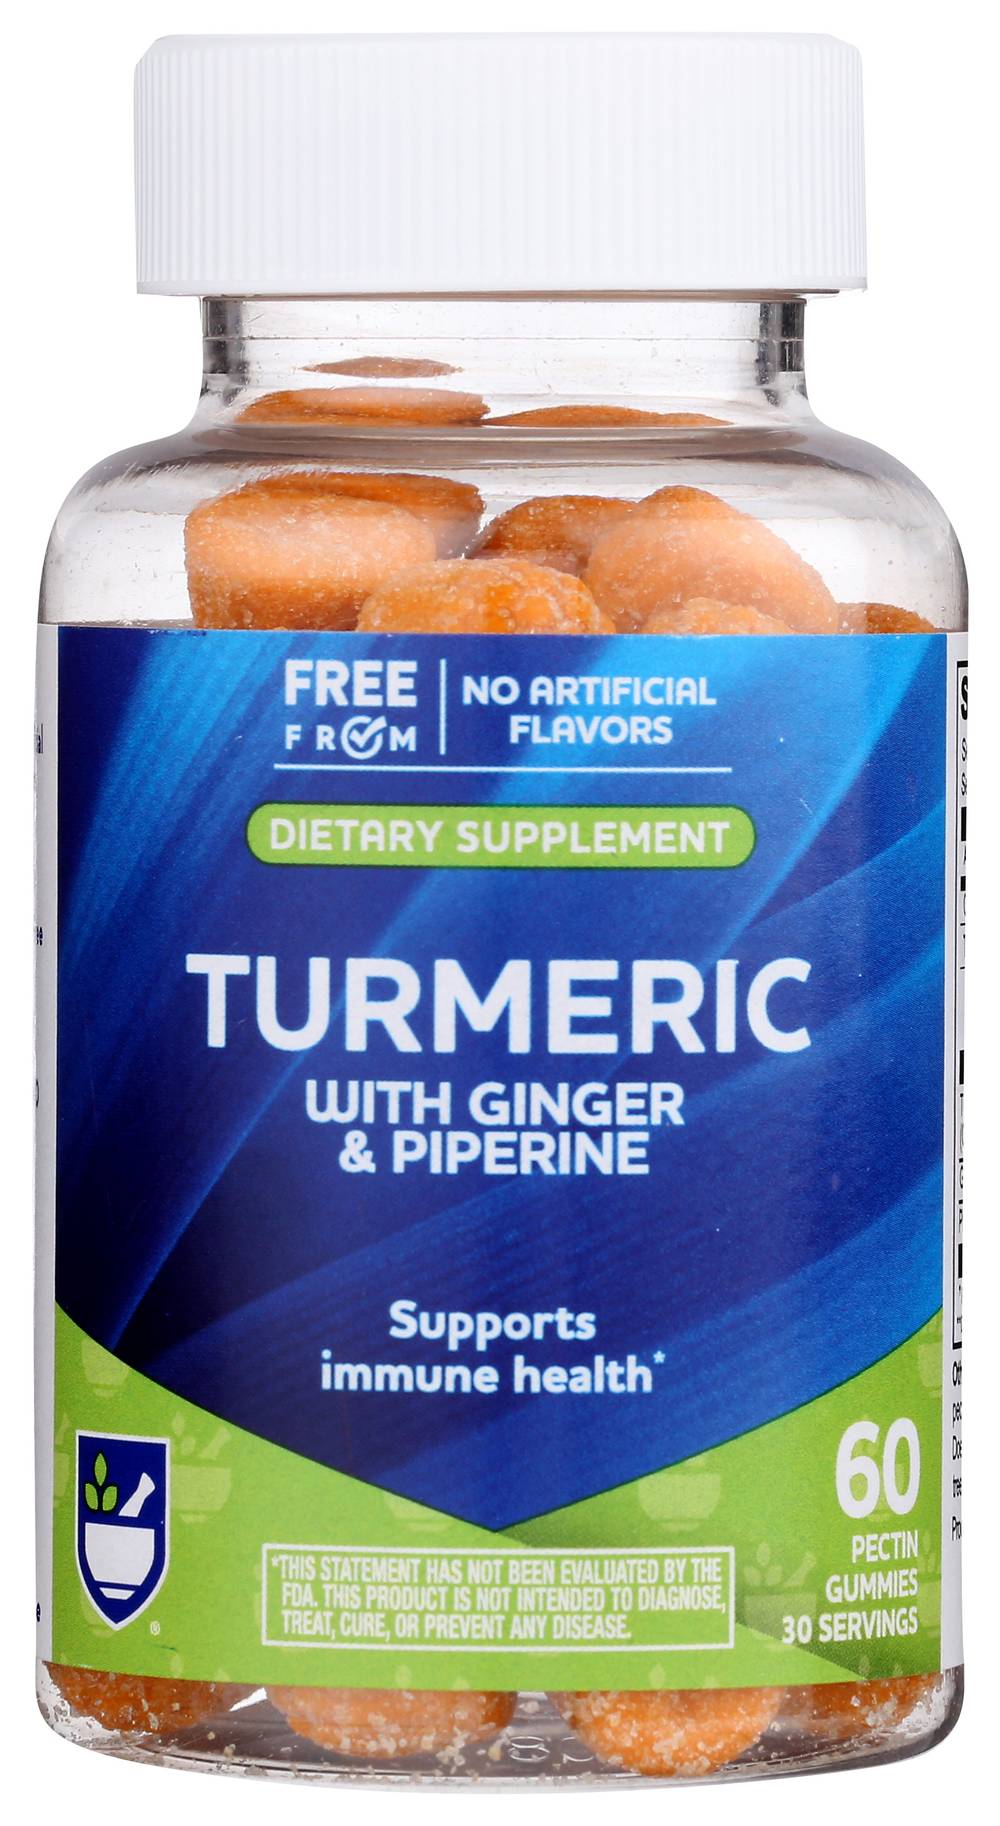 Rite Aid Pectin Based Turmeric Gummy - Ginger & Piperine, 60 ct